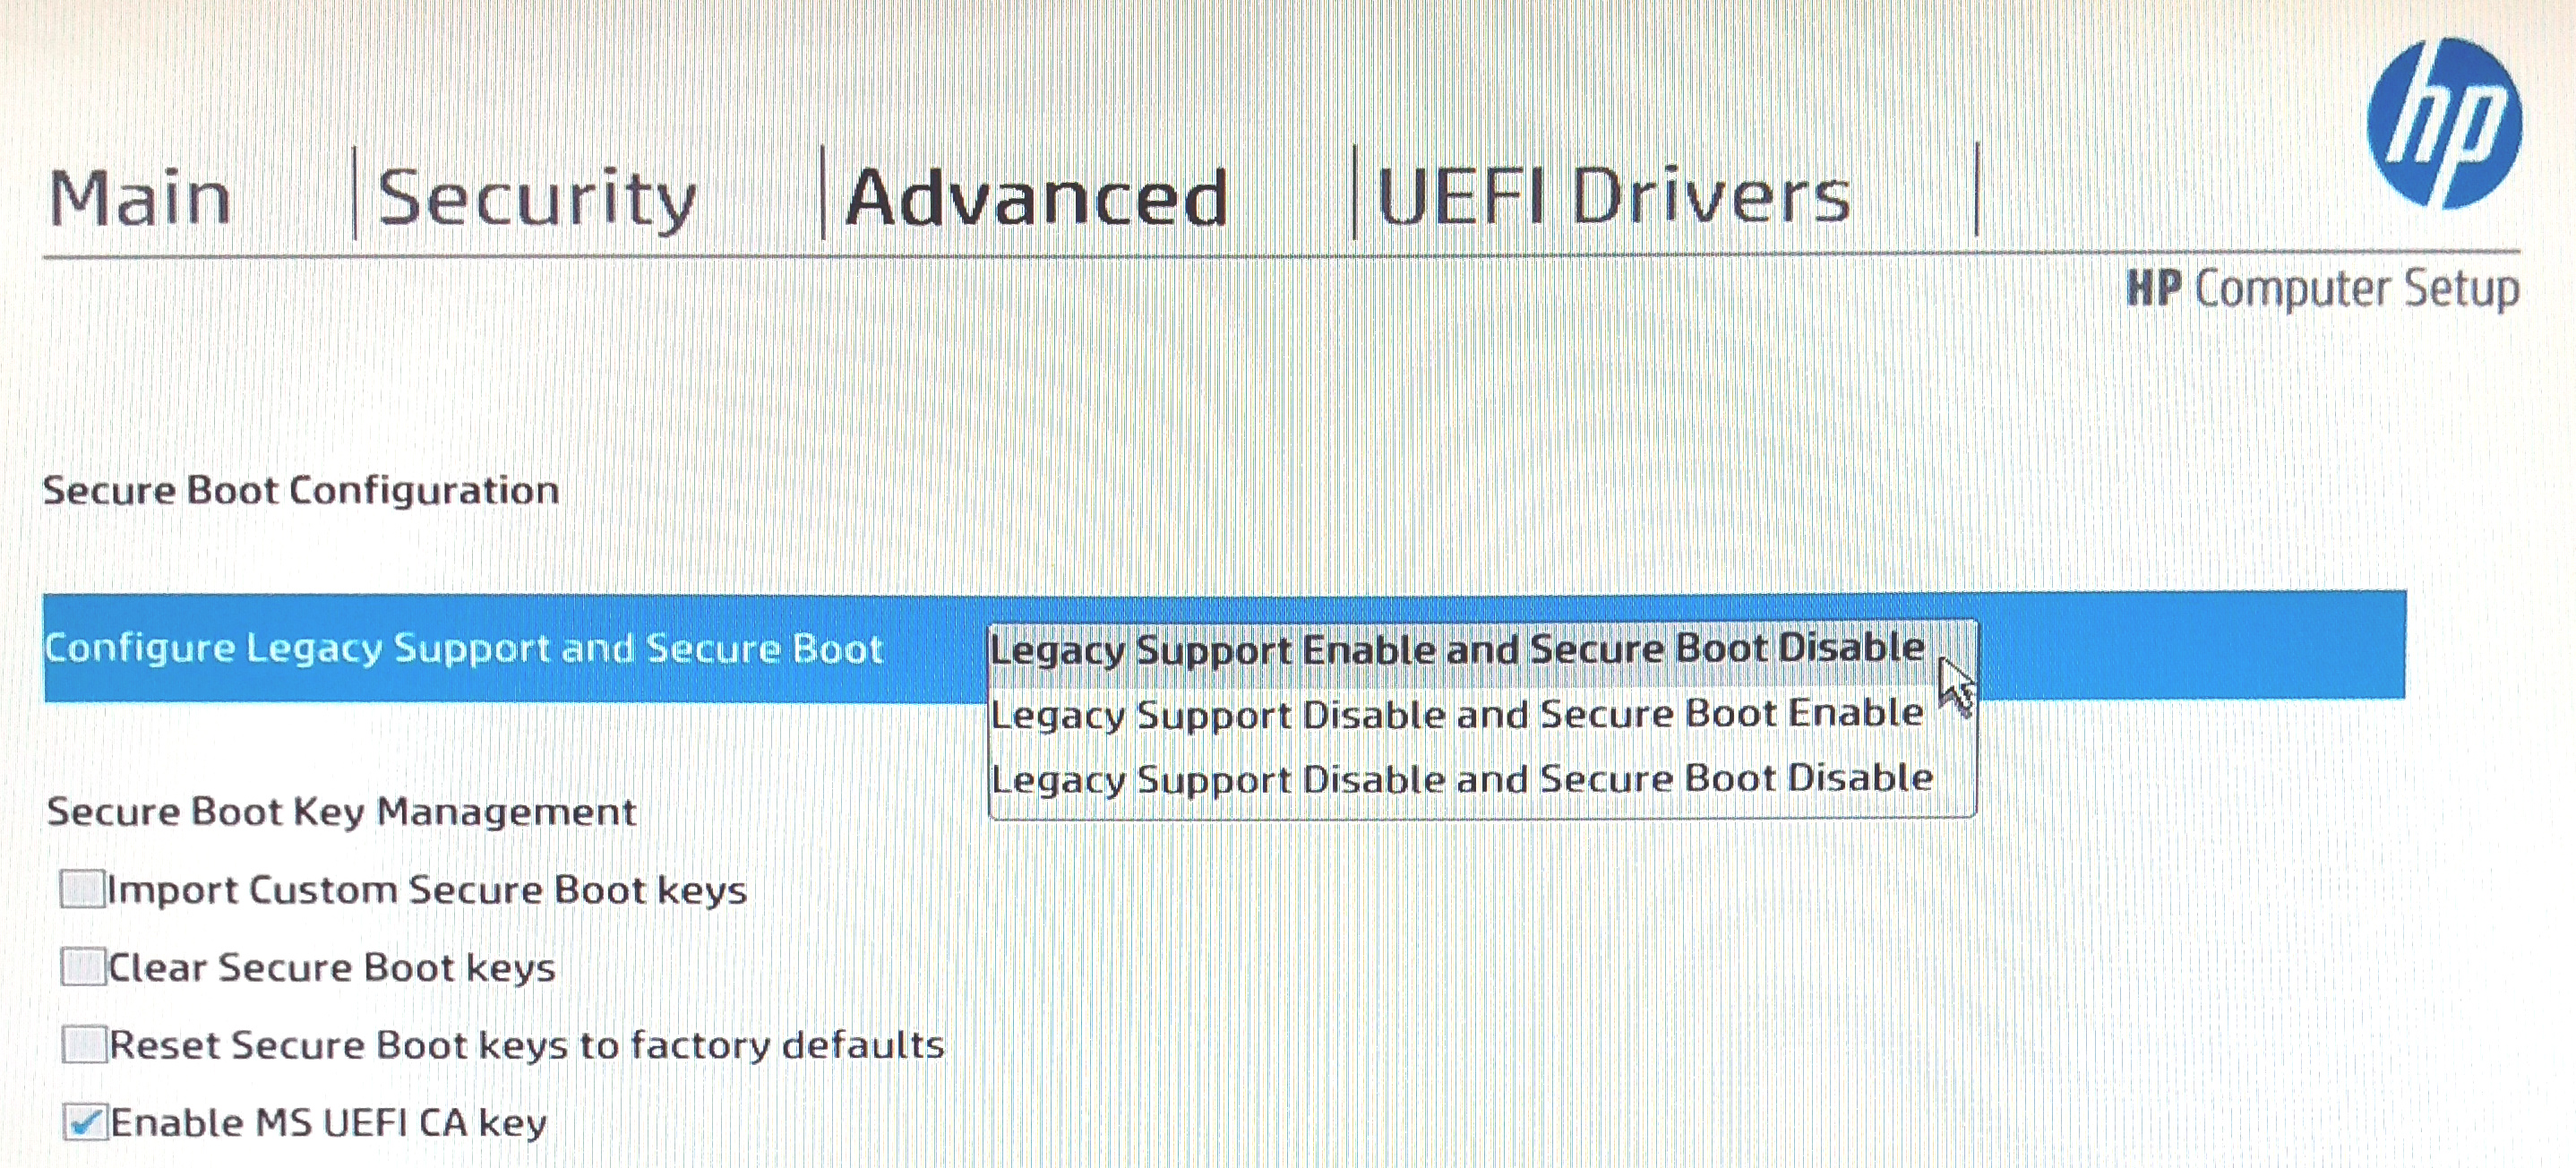 BIOS setup screen showing Secure Boot options